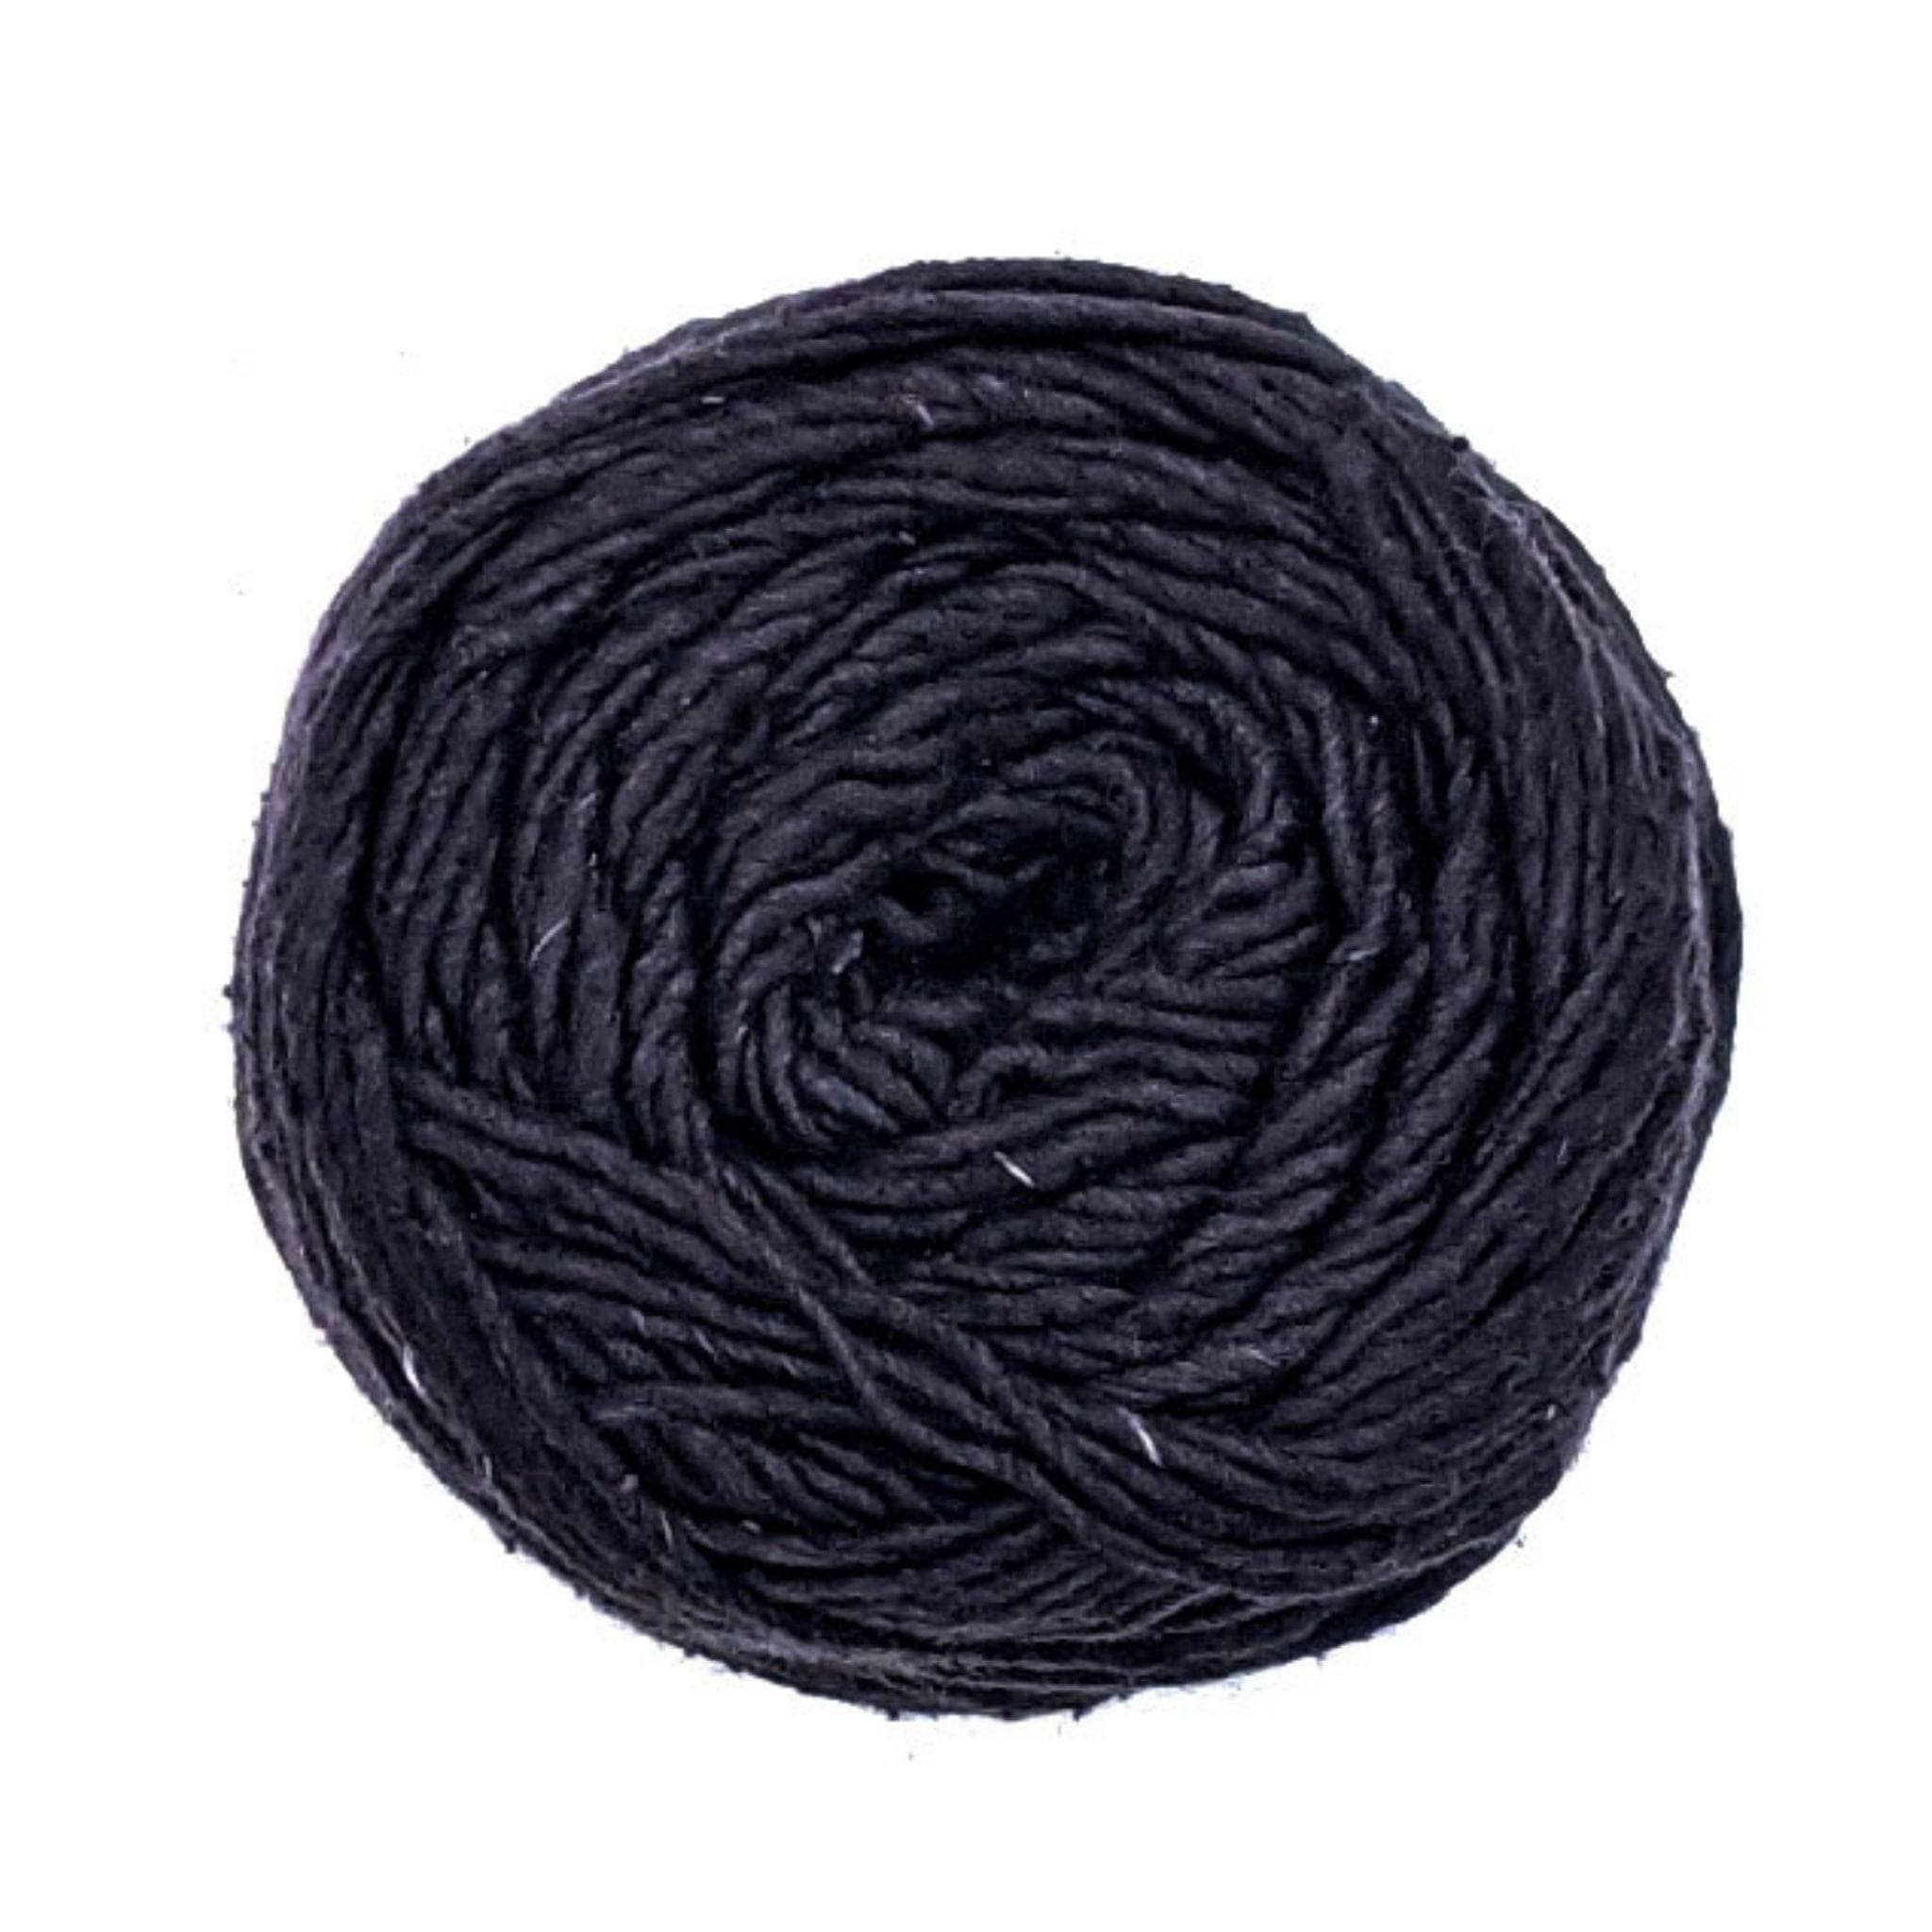 Silk Roving Worsted Weight Yarn - Black